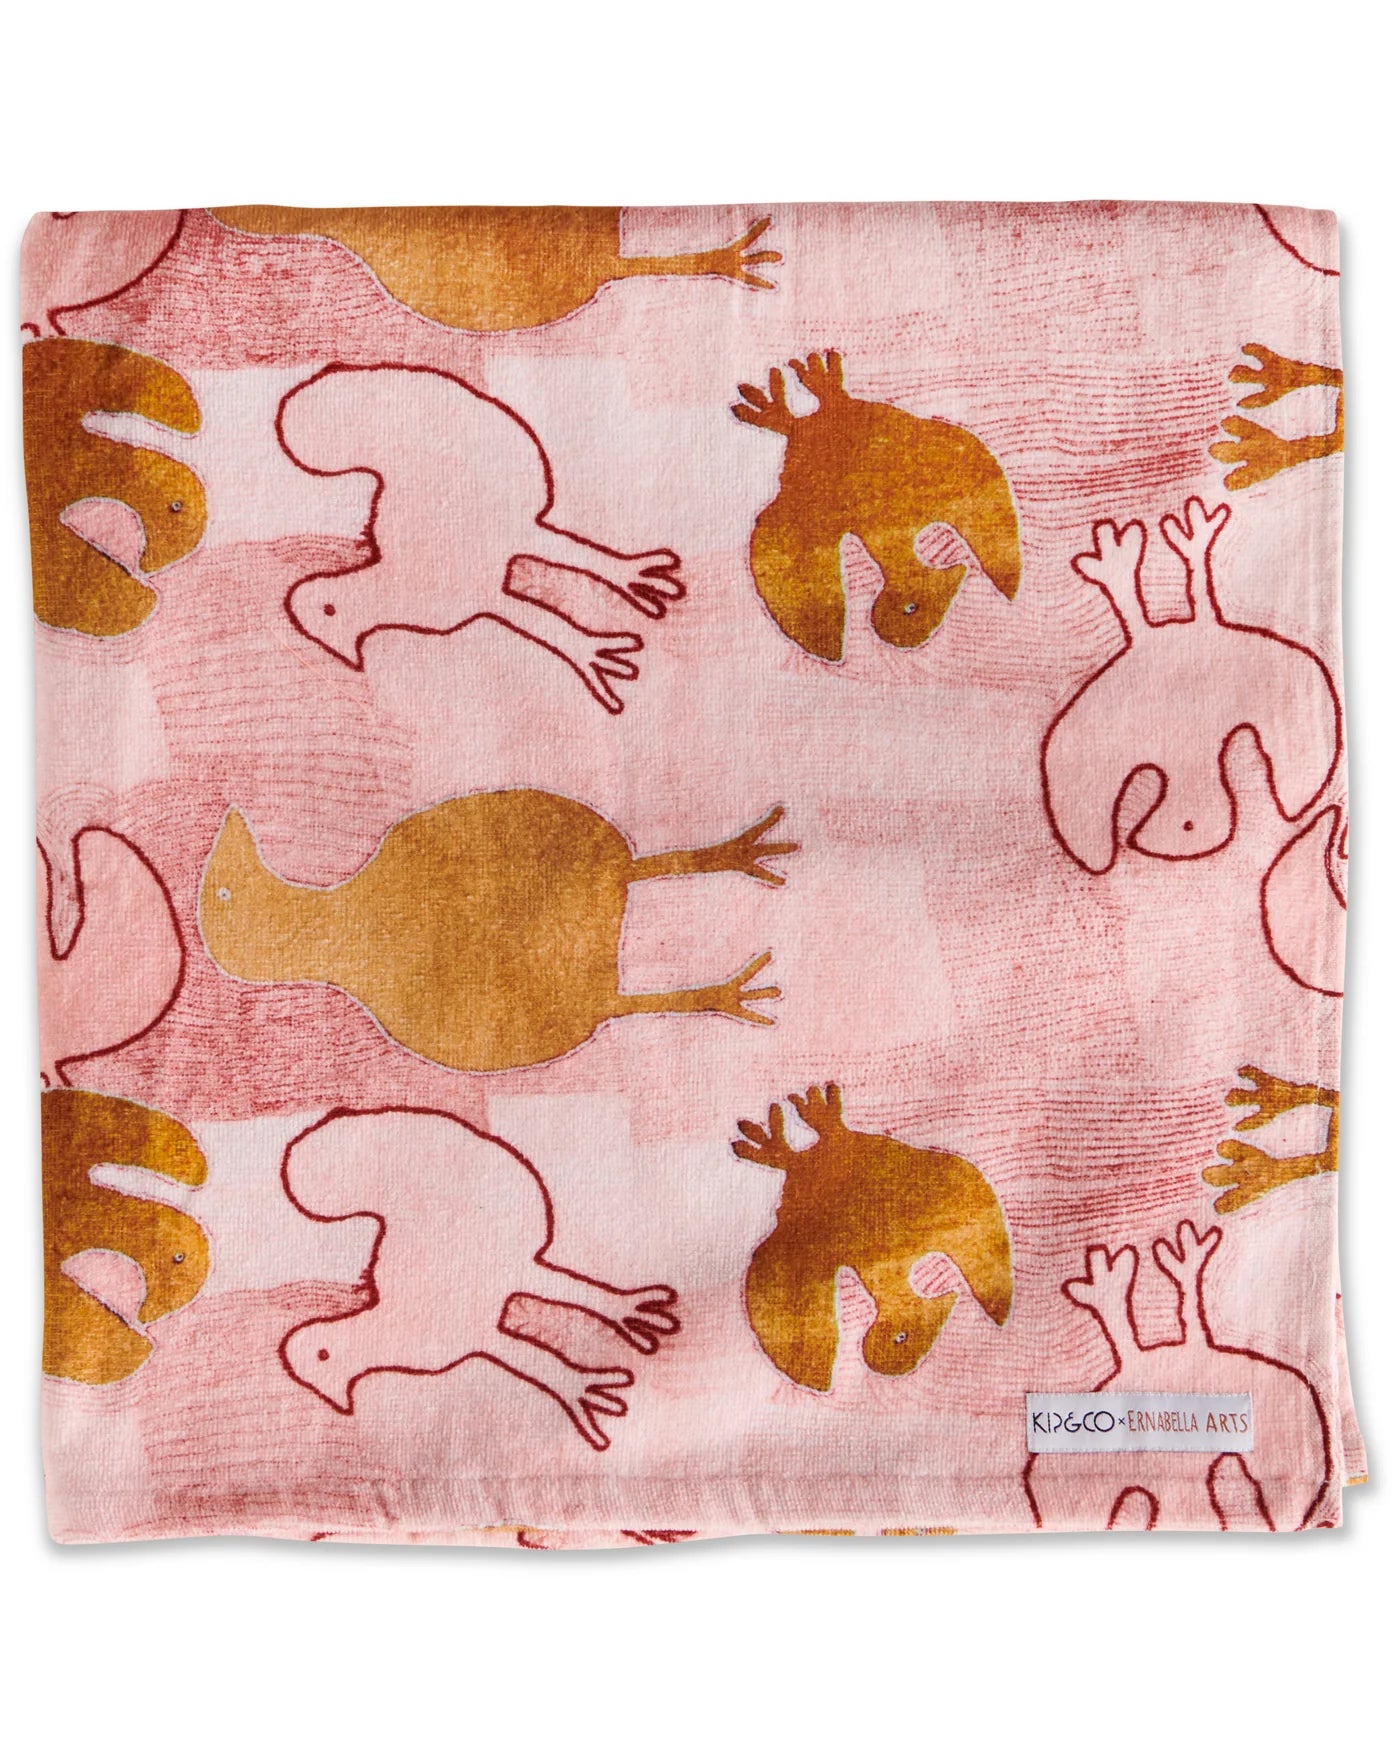 Kip & Co - Ernabella Arts Terry Towel